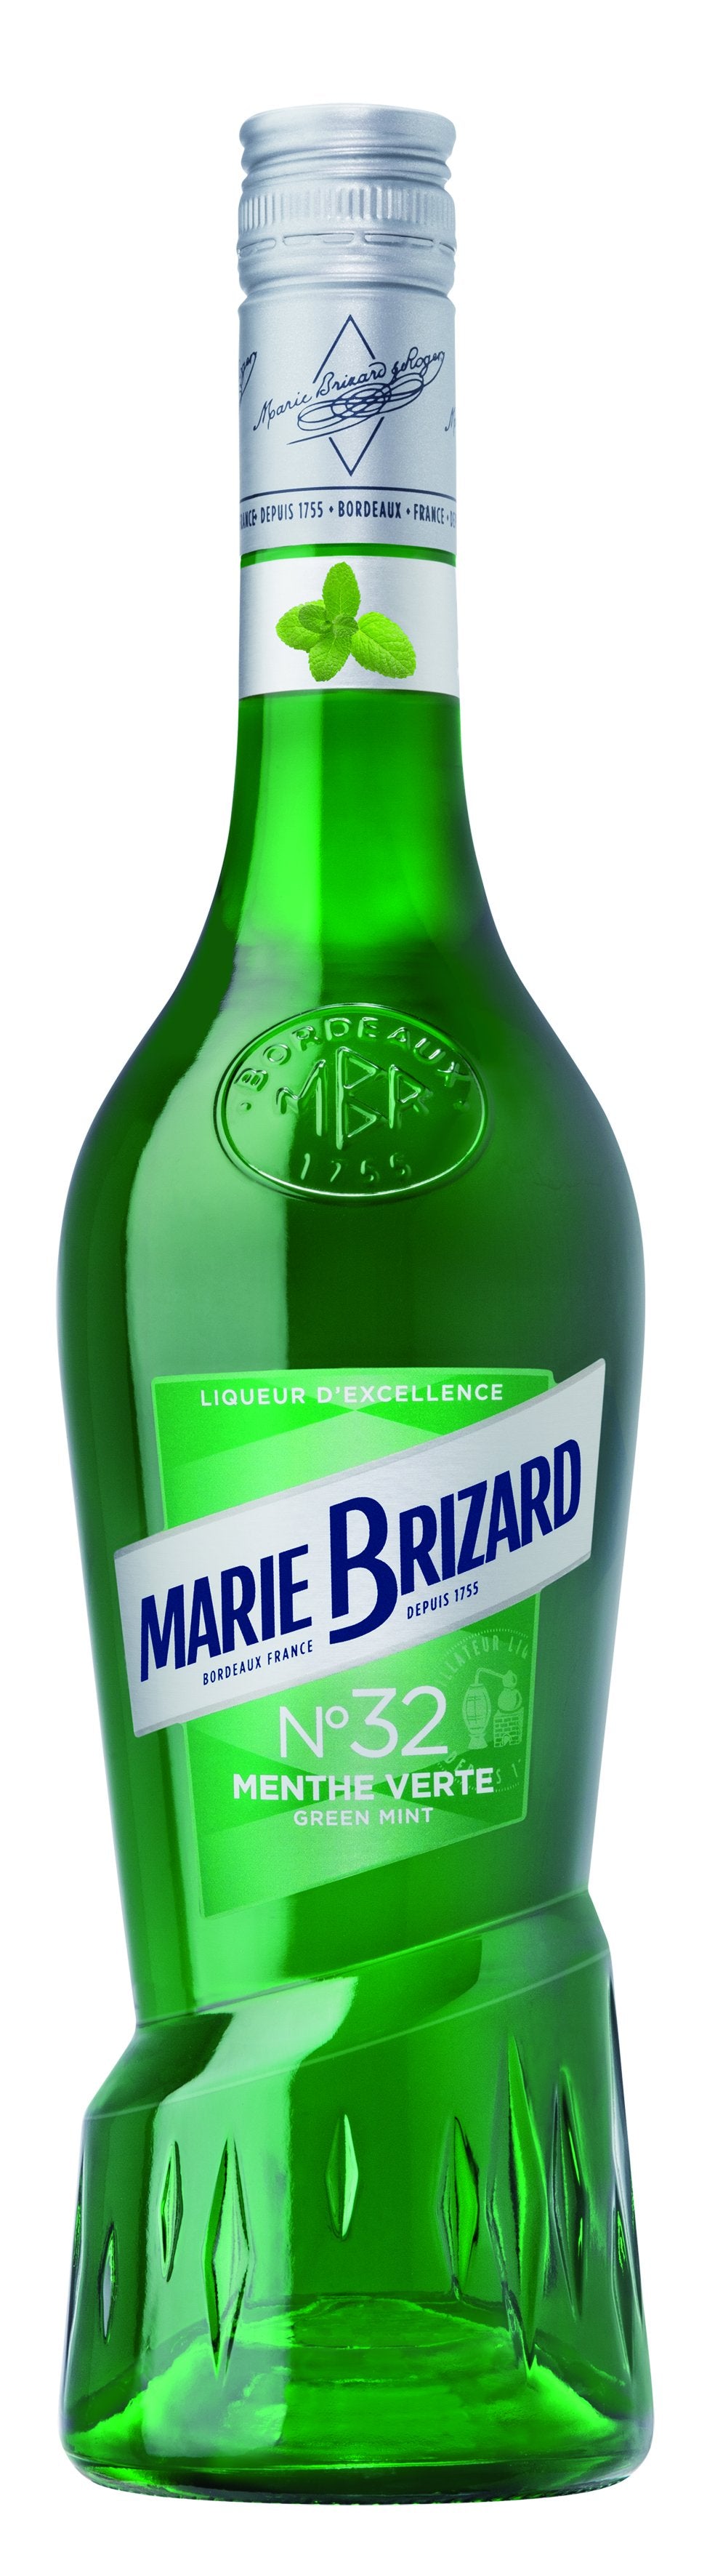 Marie Brizard Menthe Verte 70cl